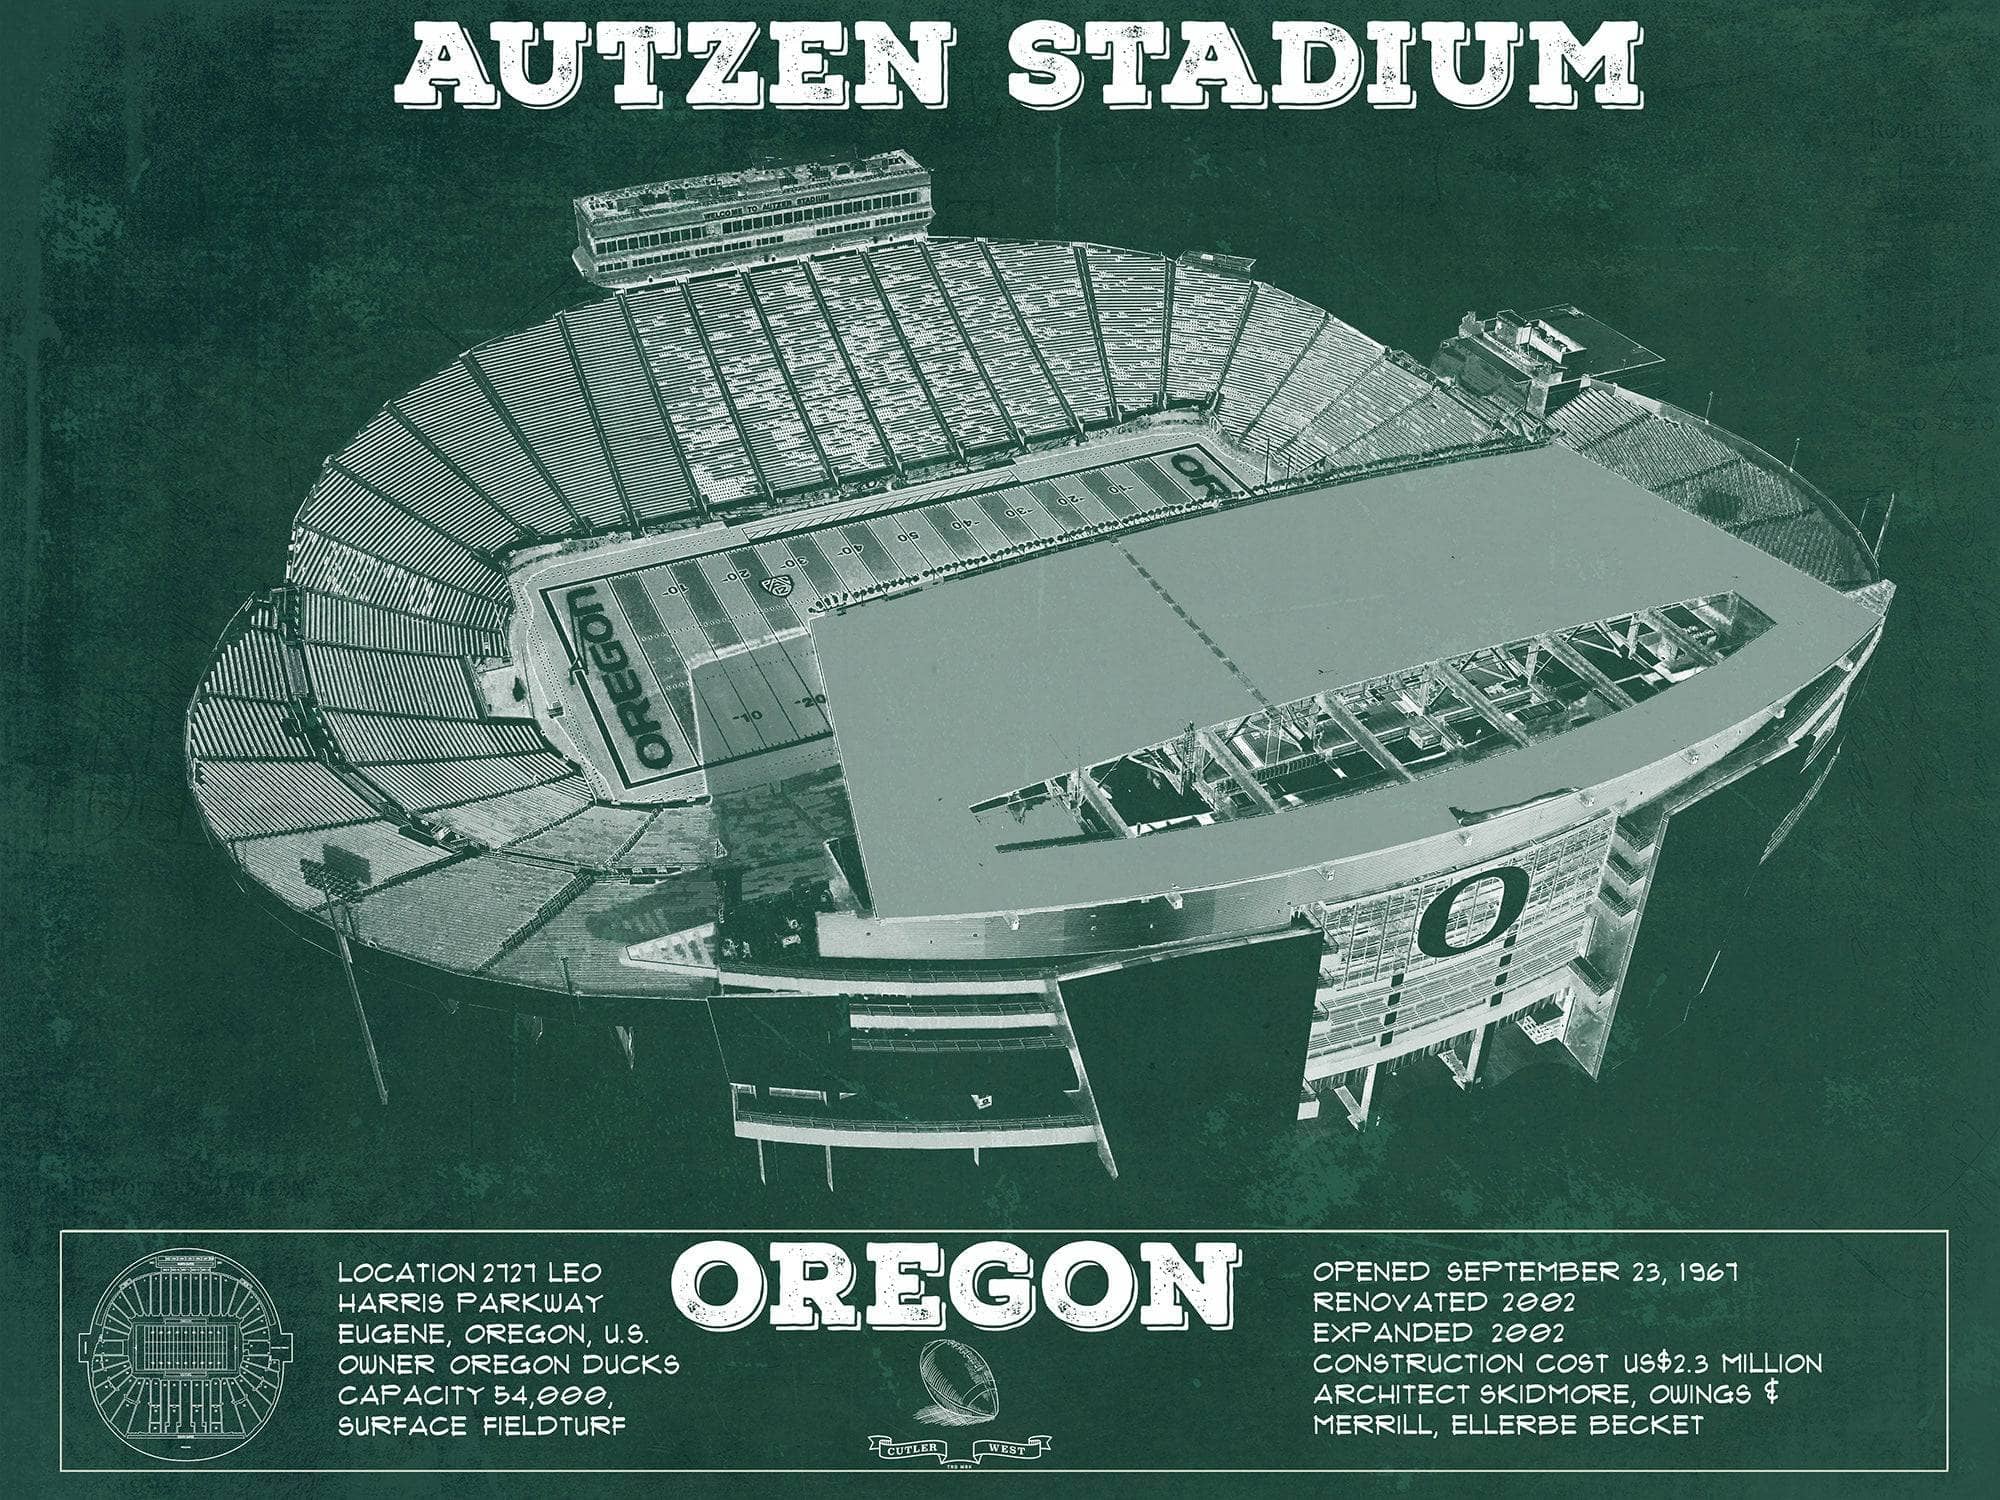 Cutler West College Football Collection 14" x 11" / Unframed Vintage Autzen Stadium - Oregon Ducks Football Print 718616953-14"-x-11"35735